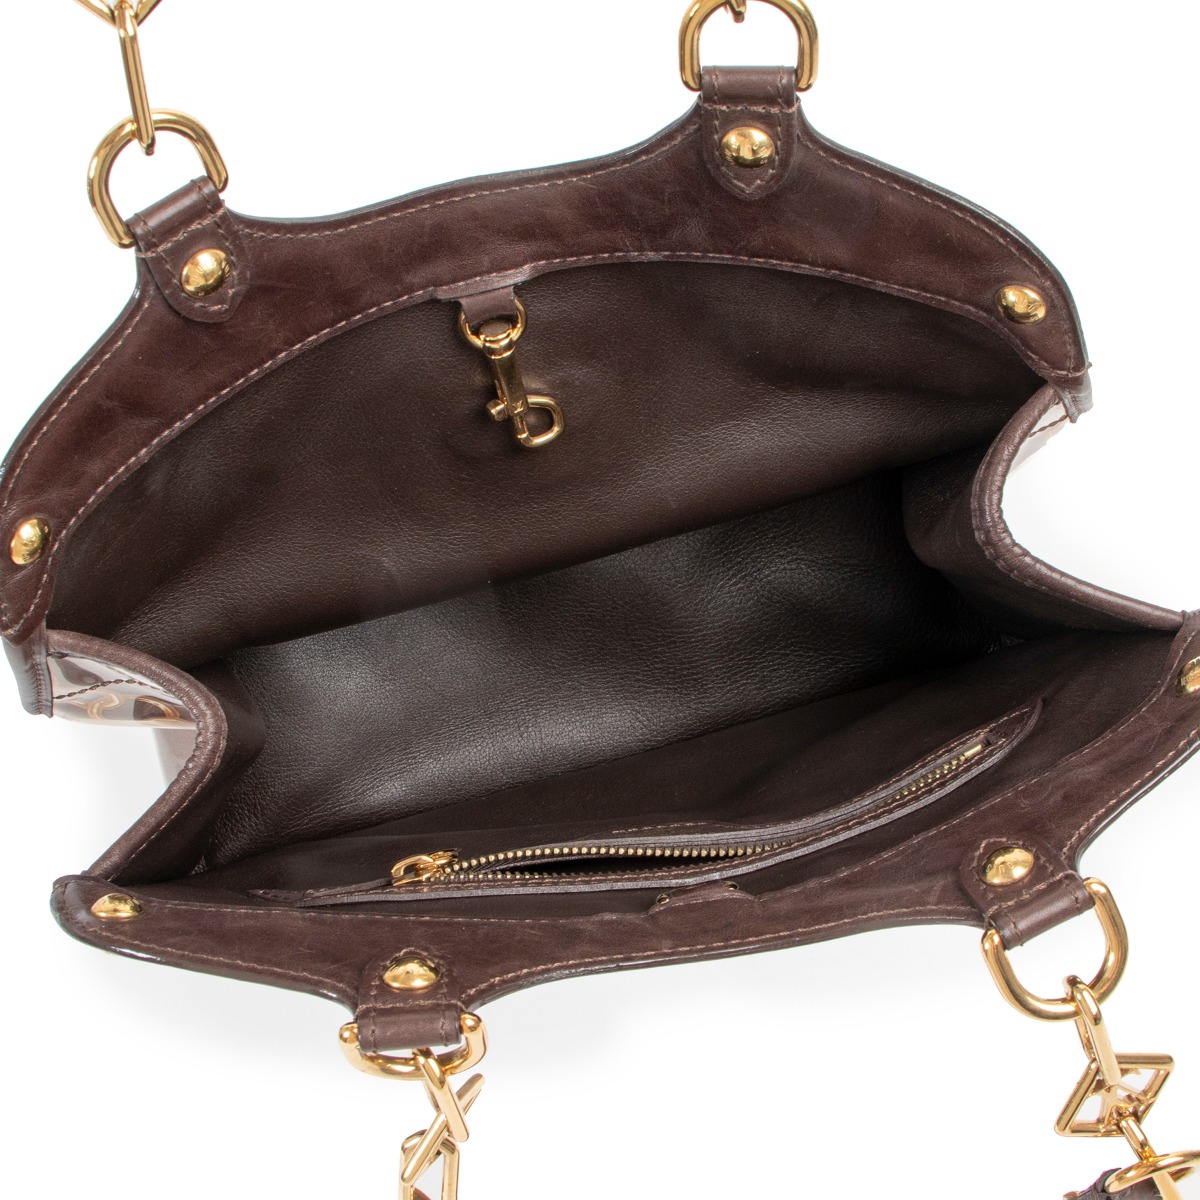 $2300 Louis Vuitton Limited Edition Taupe Monogram Cabas Charms Bag Purse -  Lust4Labels